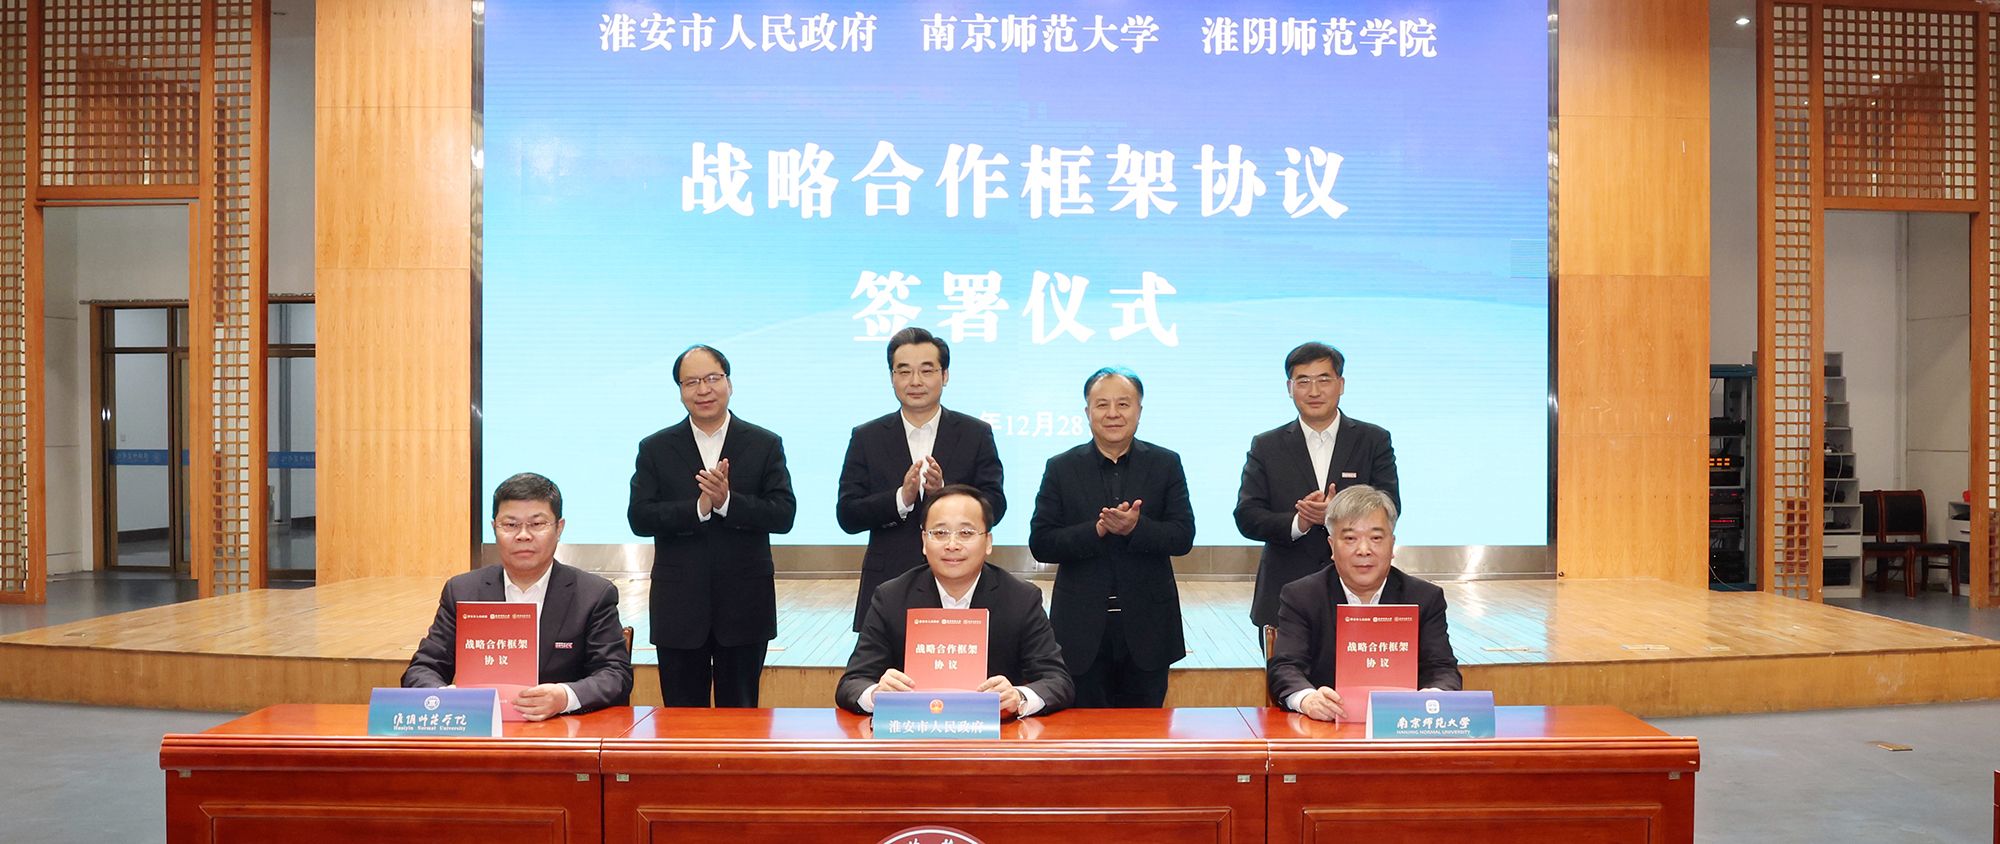 9159.com与淮安市人民政府、南京师范大学签署战略合作框架协议